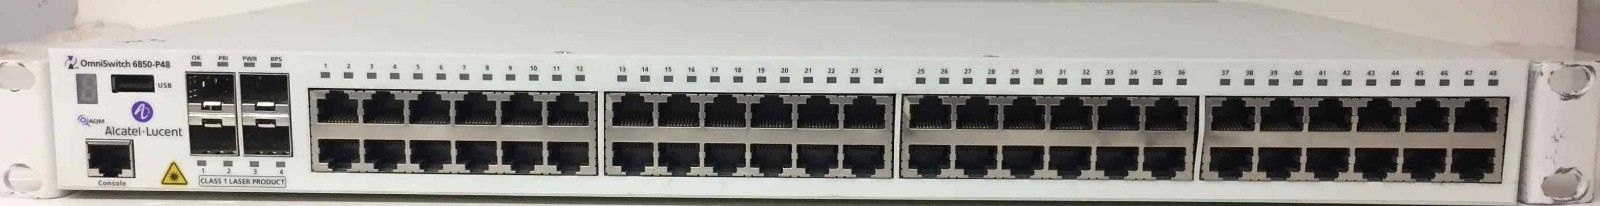 Alcatel-Lucent os6450-p48 48 puertos GbE PoE, PoE + 802.3 at de conmutadores administrados L3 2xsfp